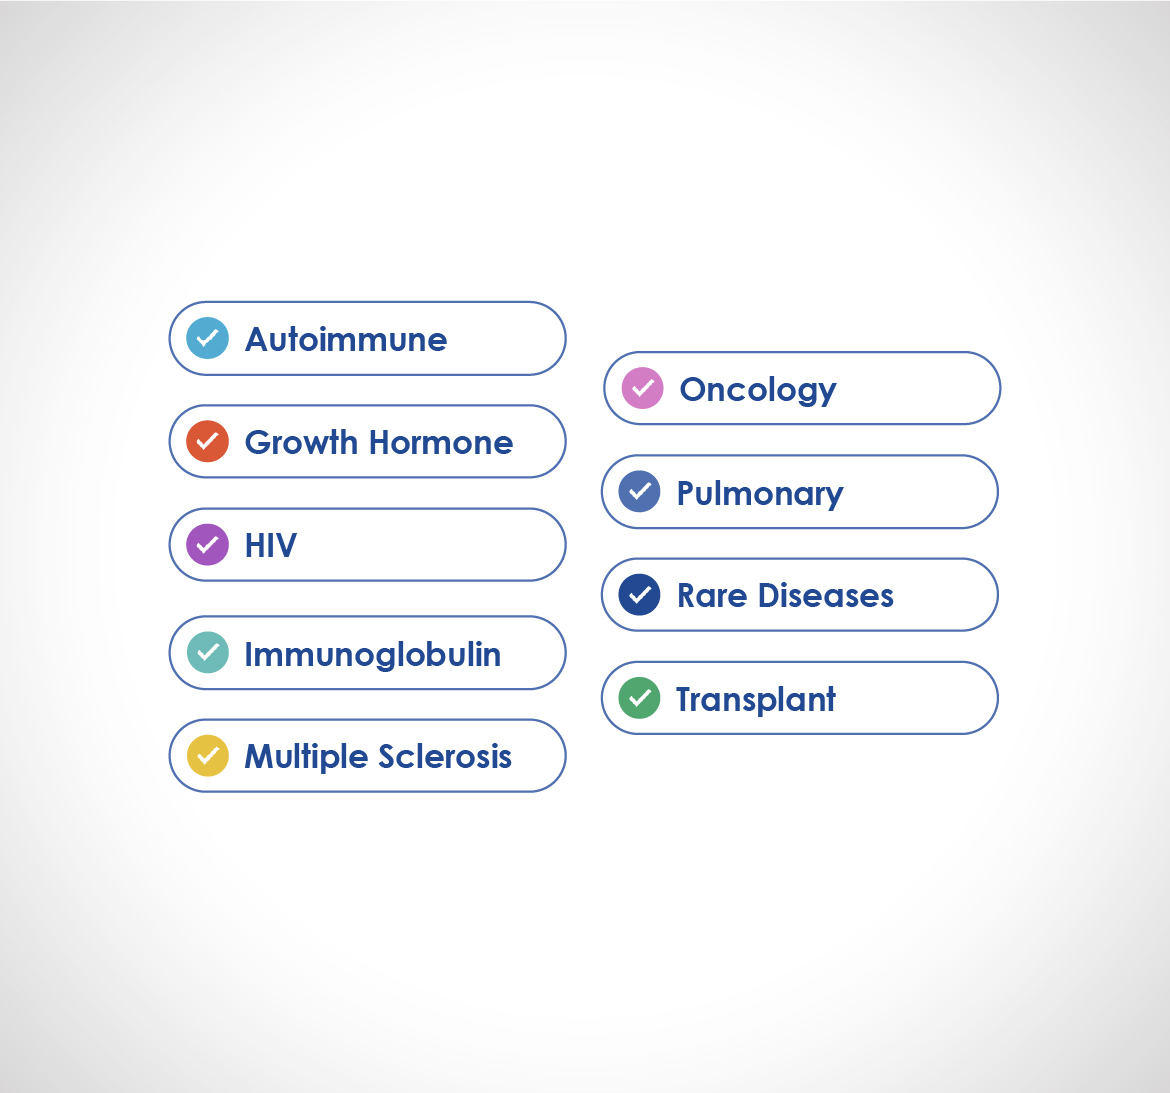 Infographic listing COEs – autoimmune, growth hormone, HIV, immunoglobulin, multiple sclerosis, oncology, pulmonary, rare diseases, and transplant.